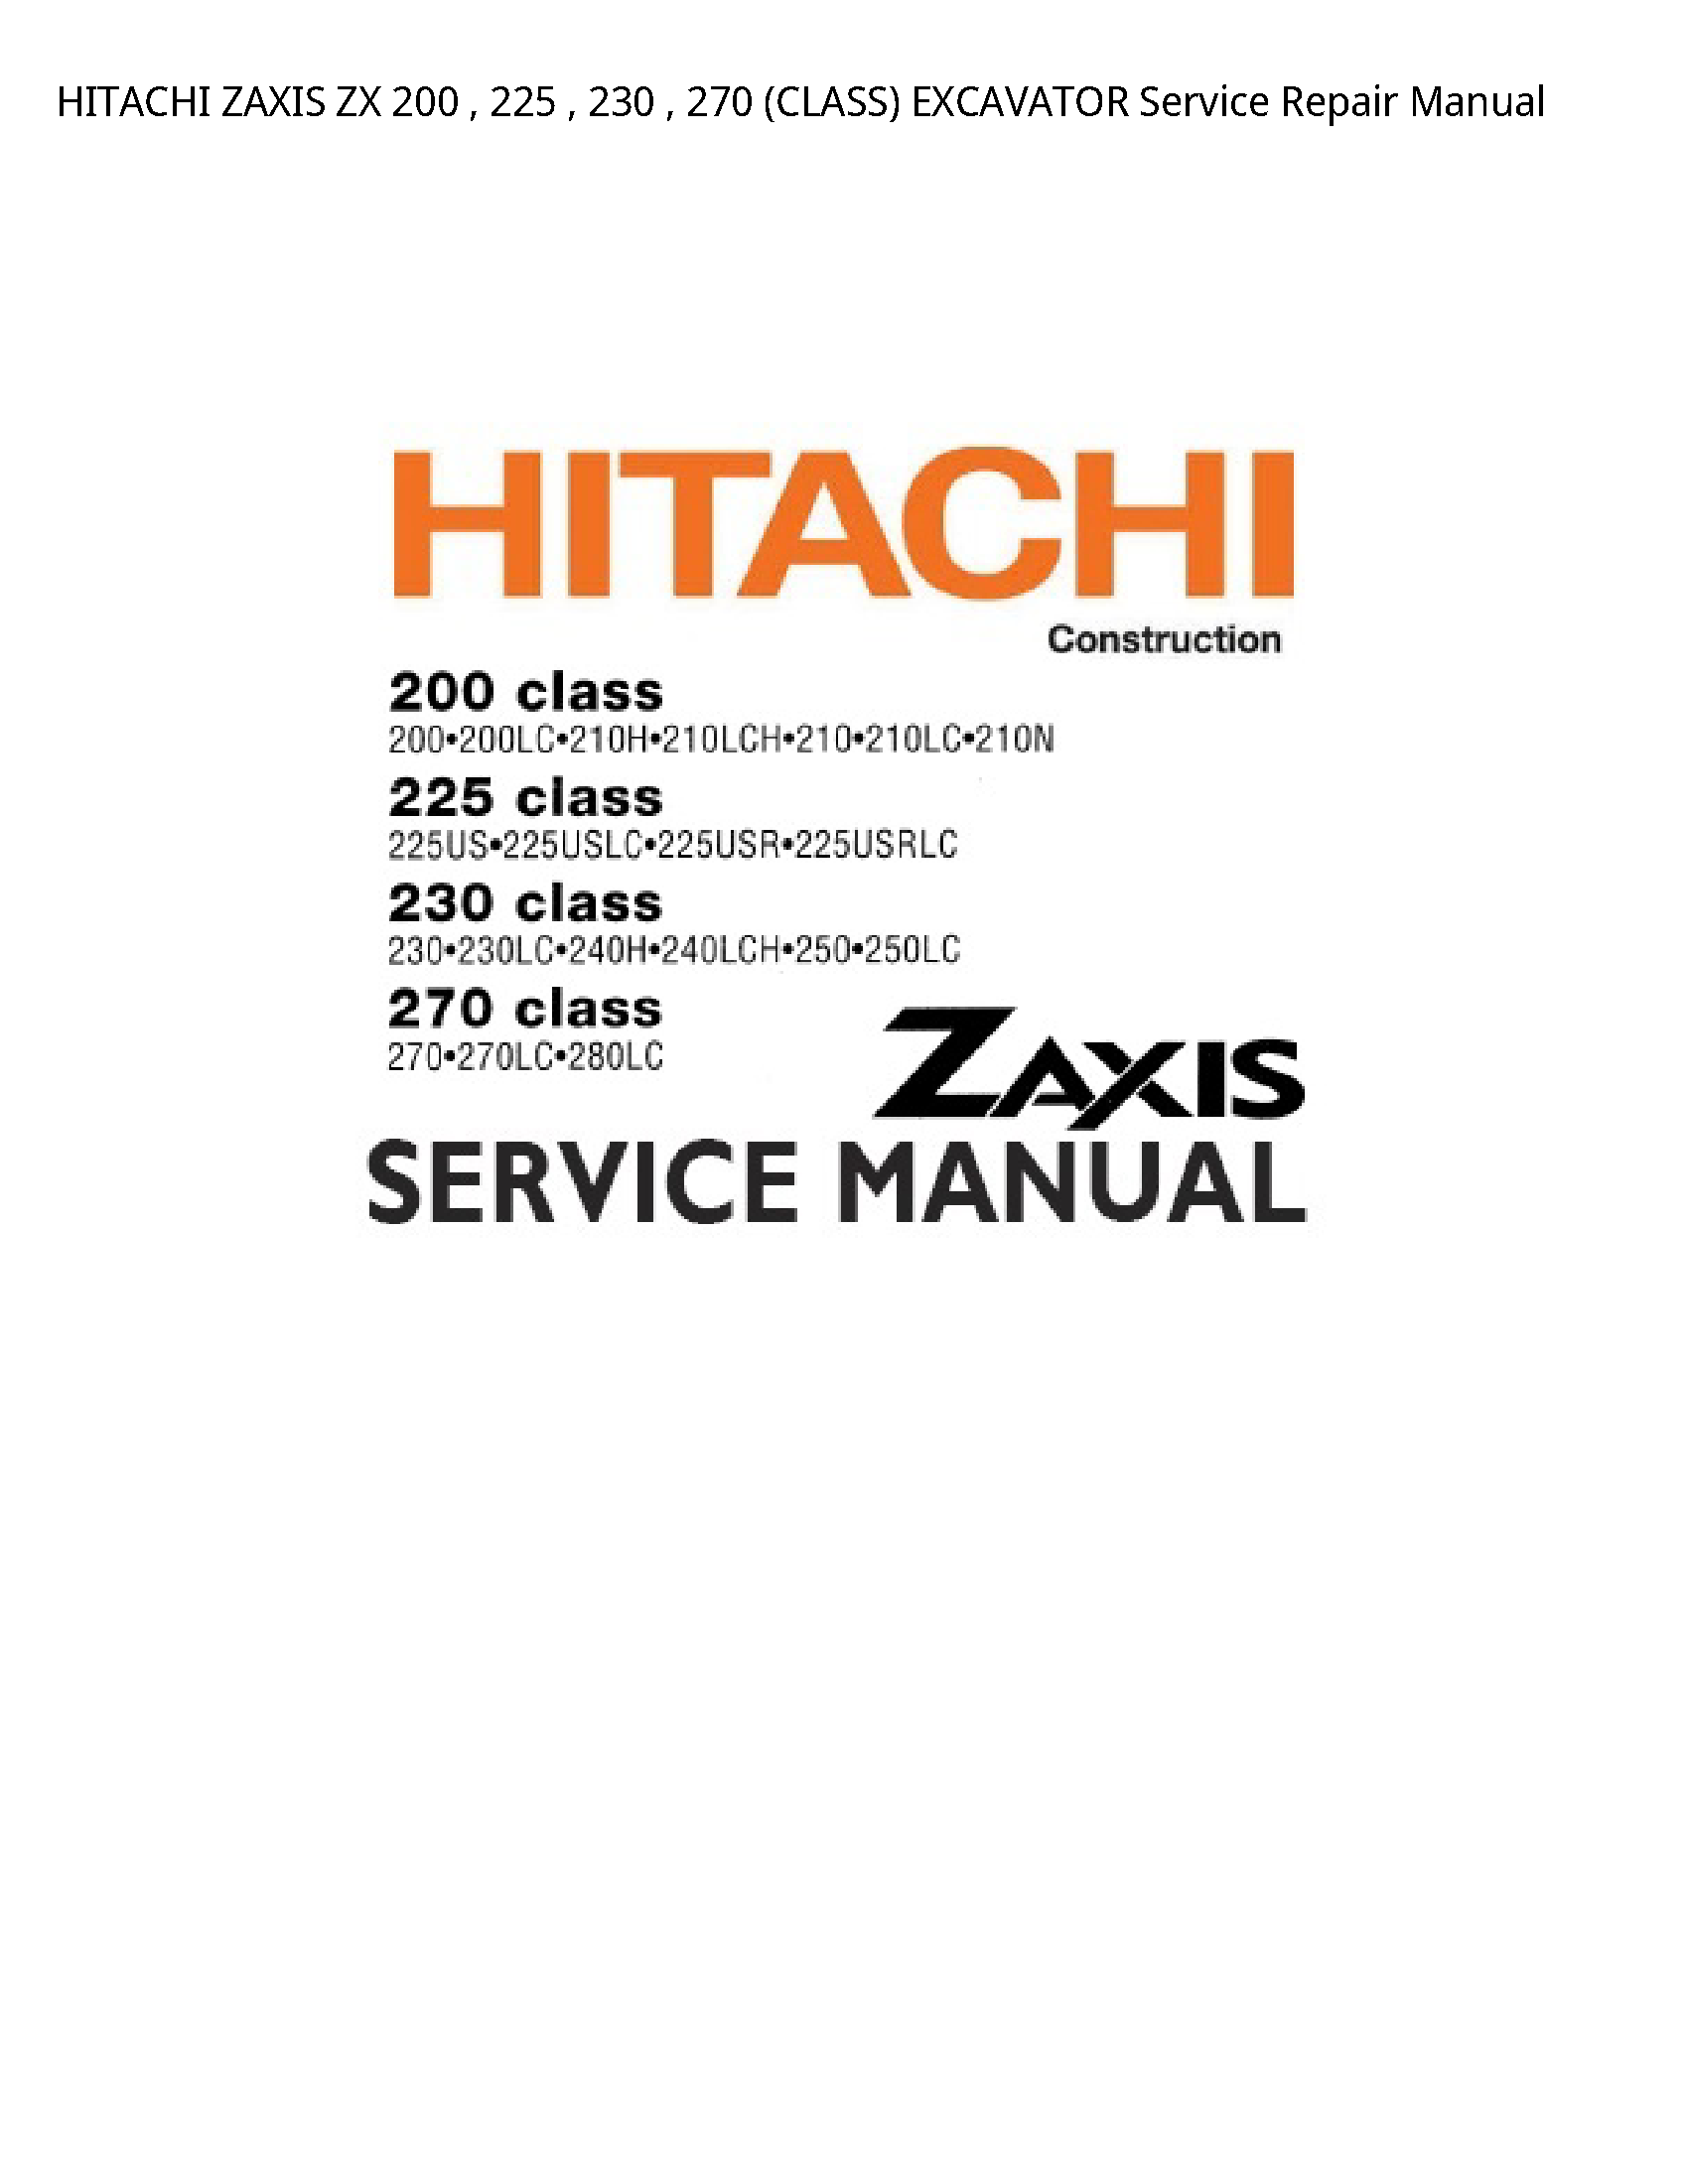 Hitachi 200 ZAXIS ZX (CLASS) EXCAVATOR manual